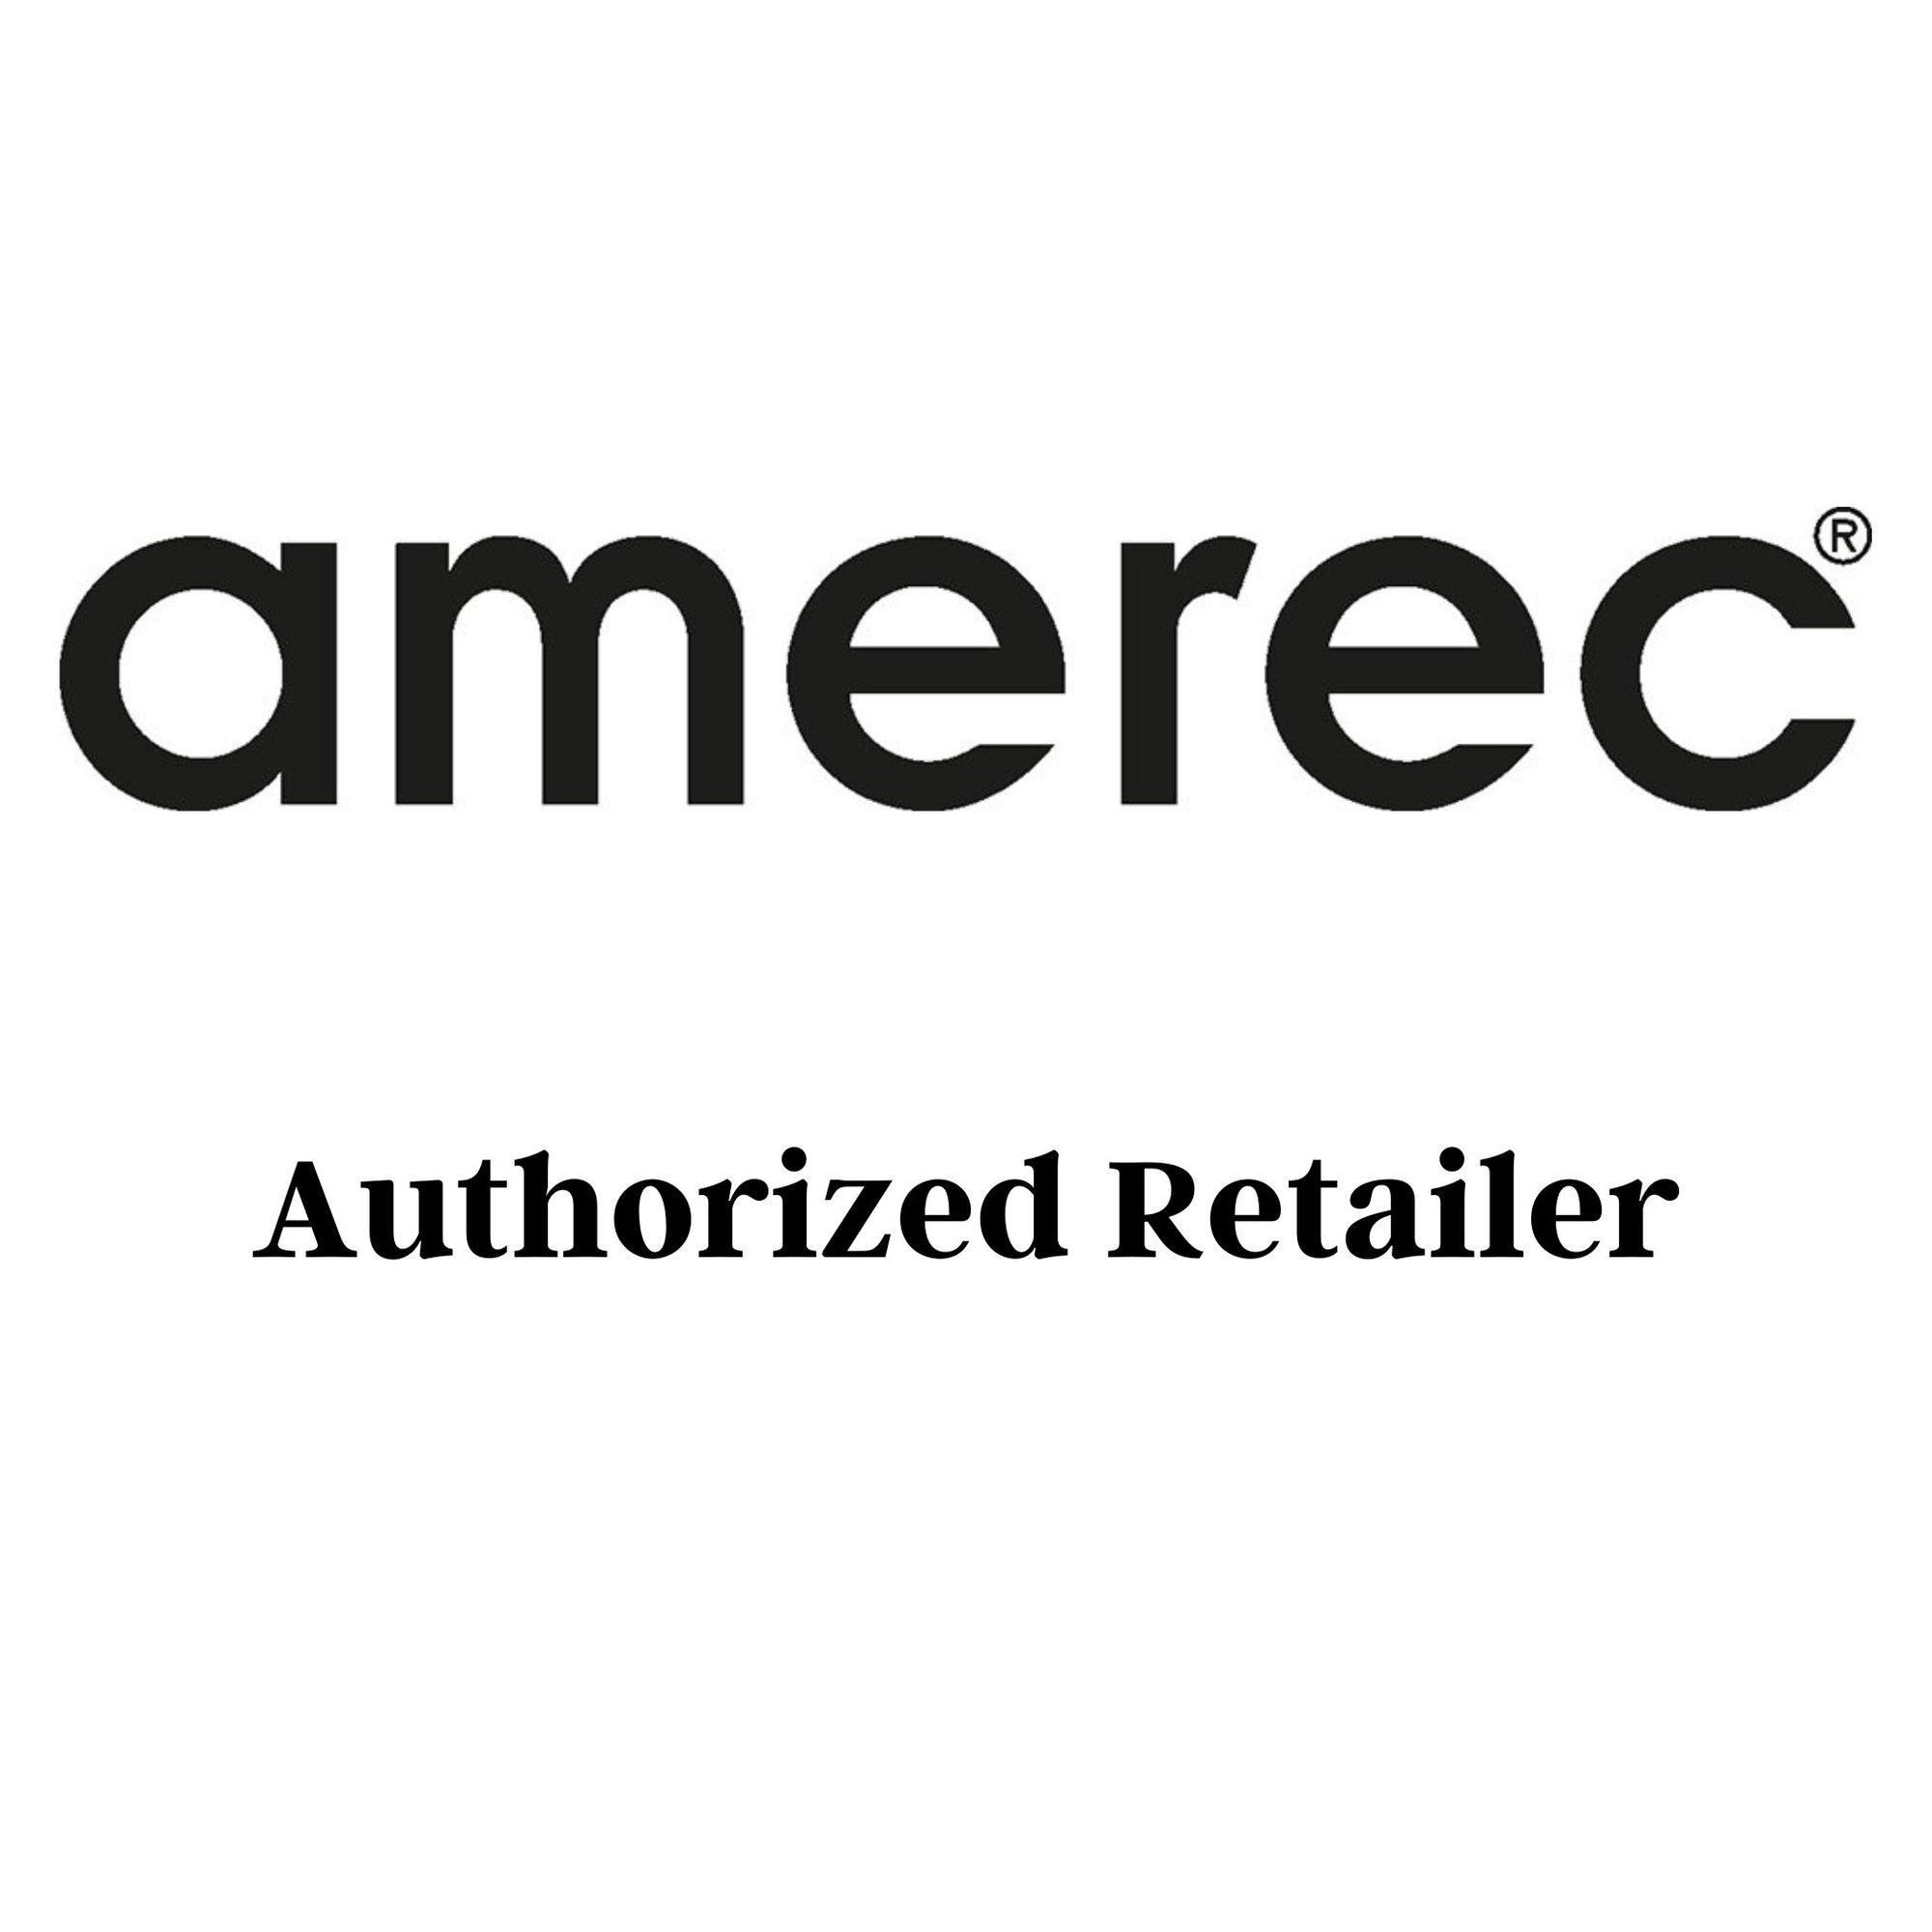 Amerec 10.5kW Stainless Steel Pro Series Sauna Heater Pro-105 - 9053-40